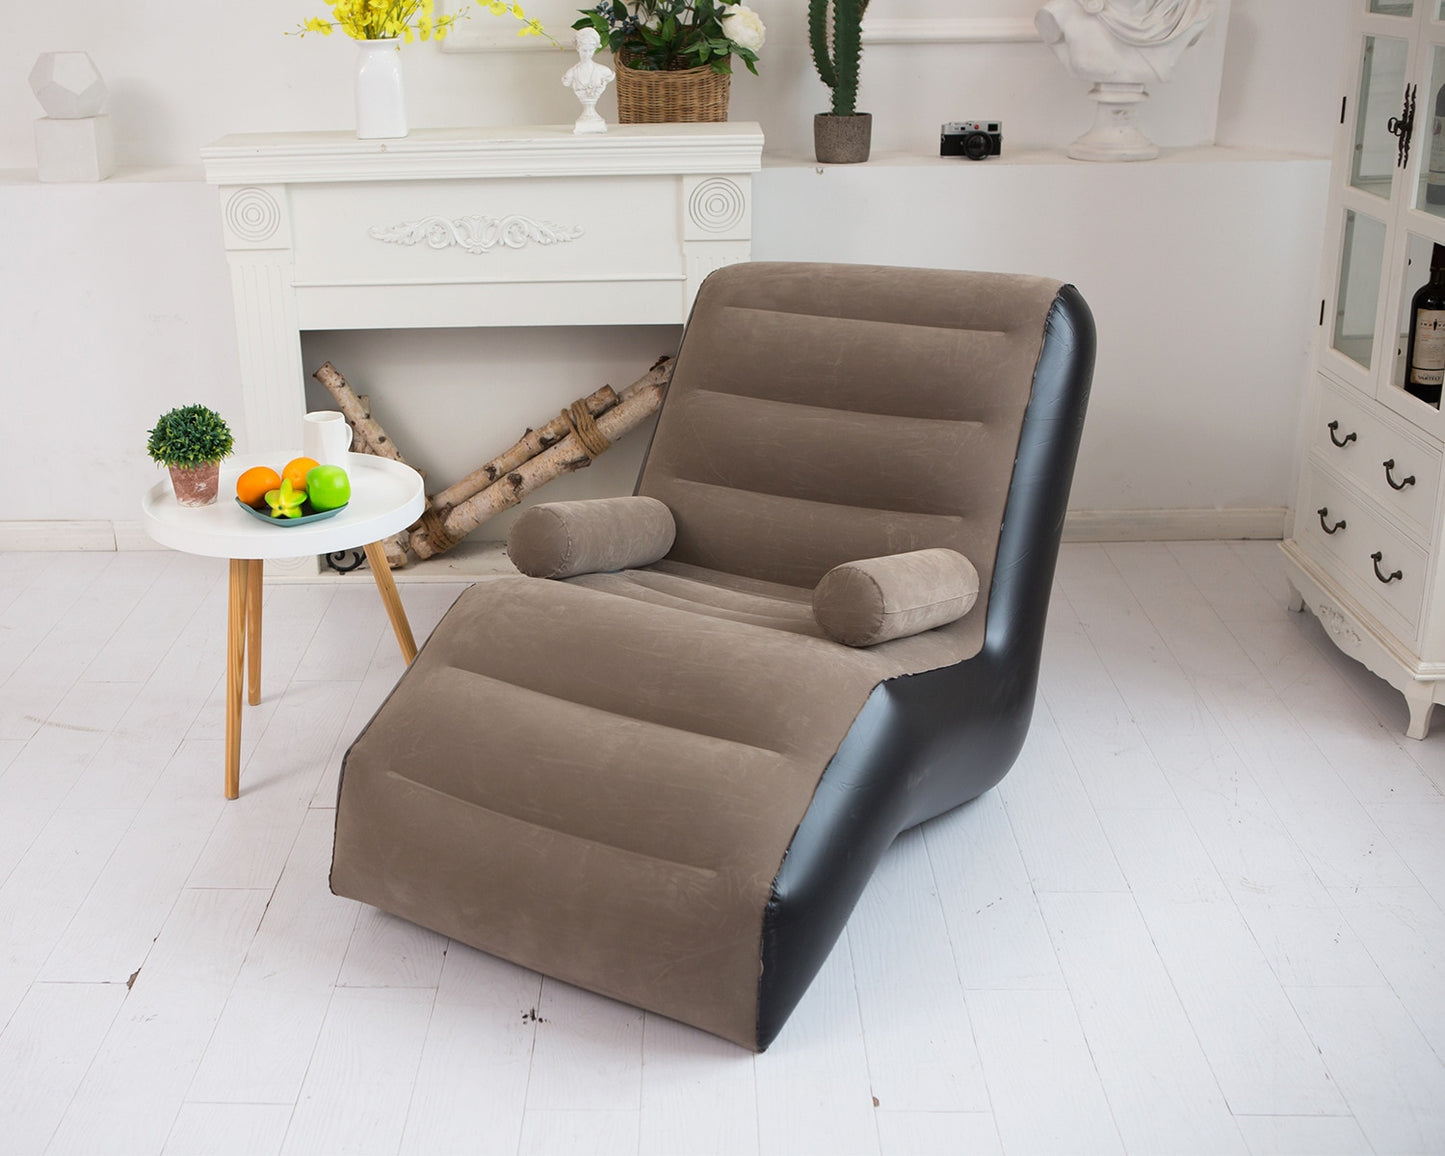 140cm Living Room S Shape Inflatable Sofa Chair Bed Portable Sofa Soft Comfortable